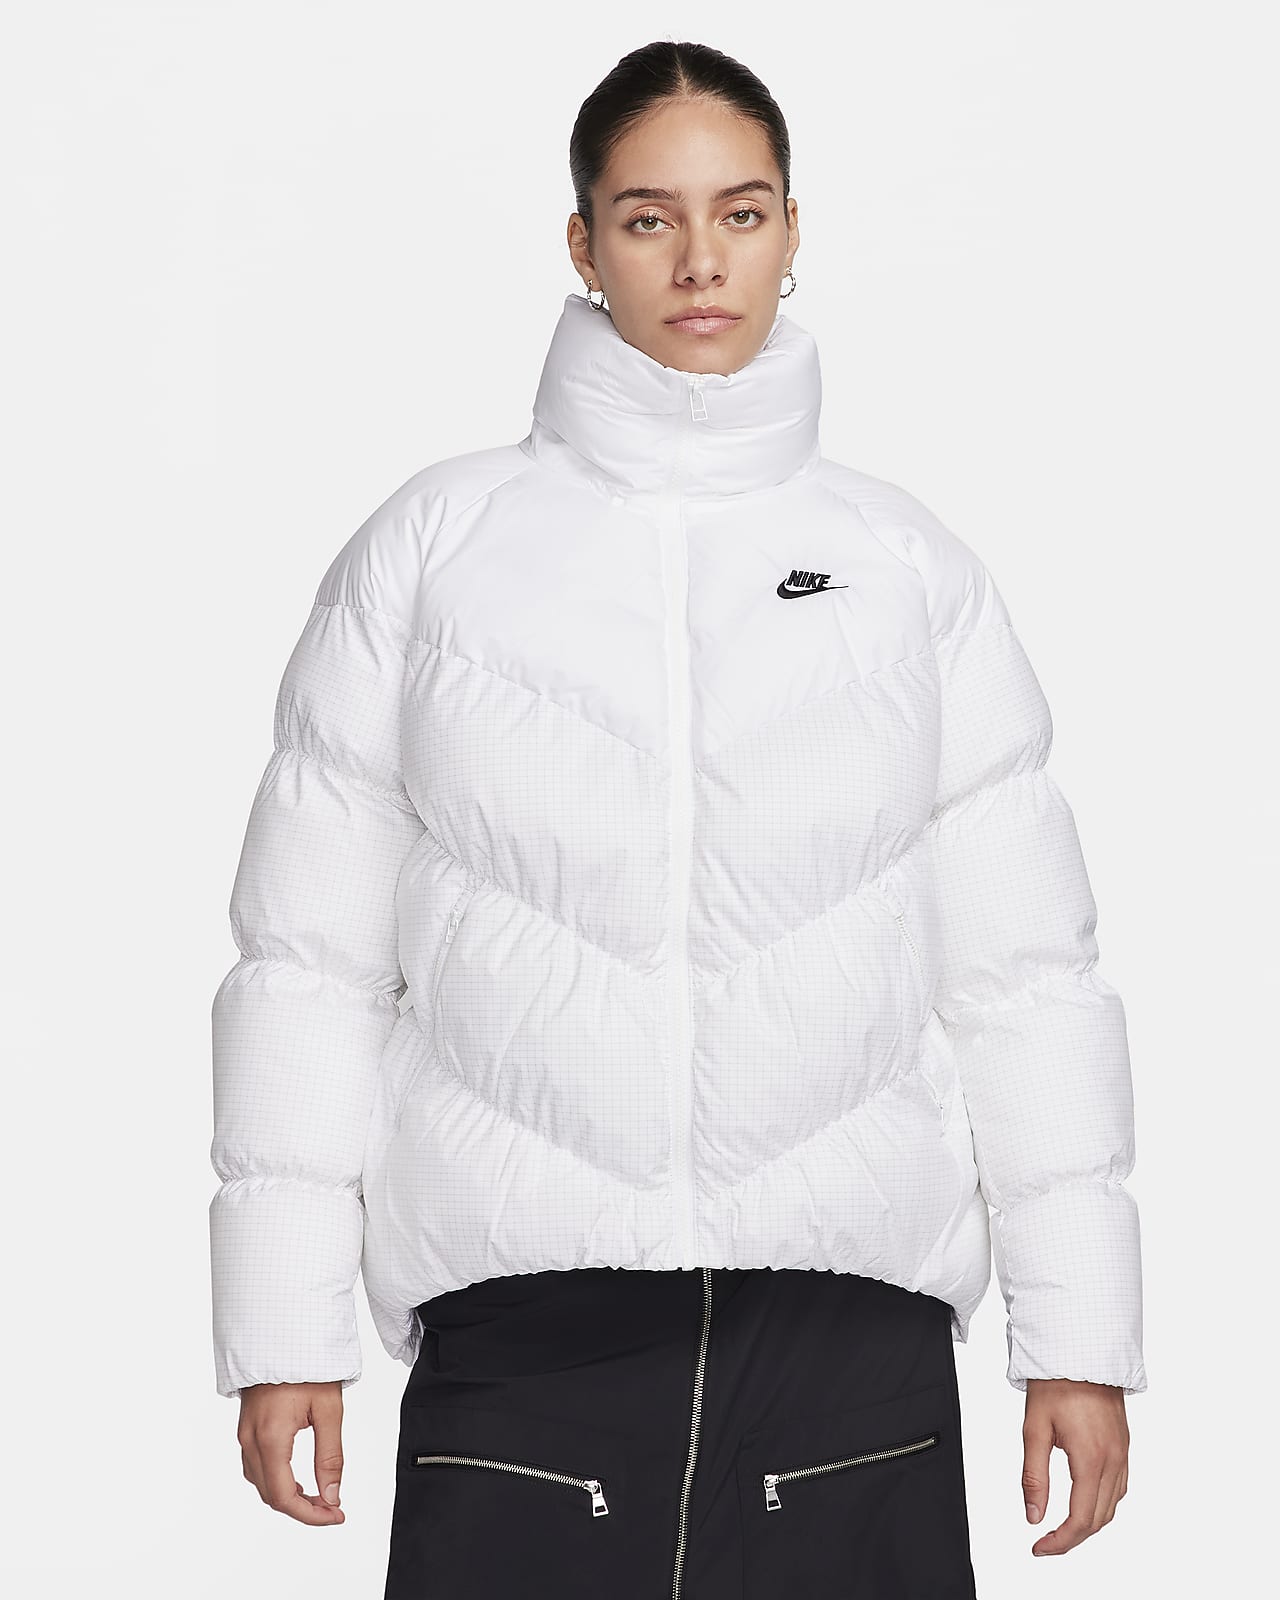 Nike White Women Winter Jackets Styles, Prices - Trendyol